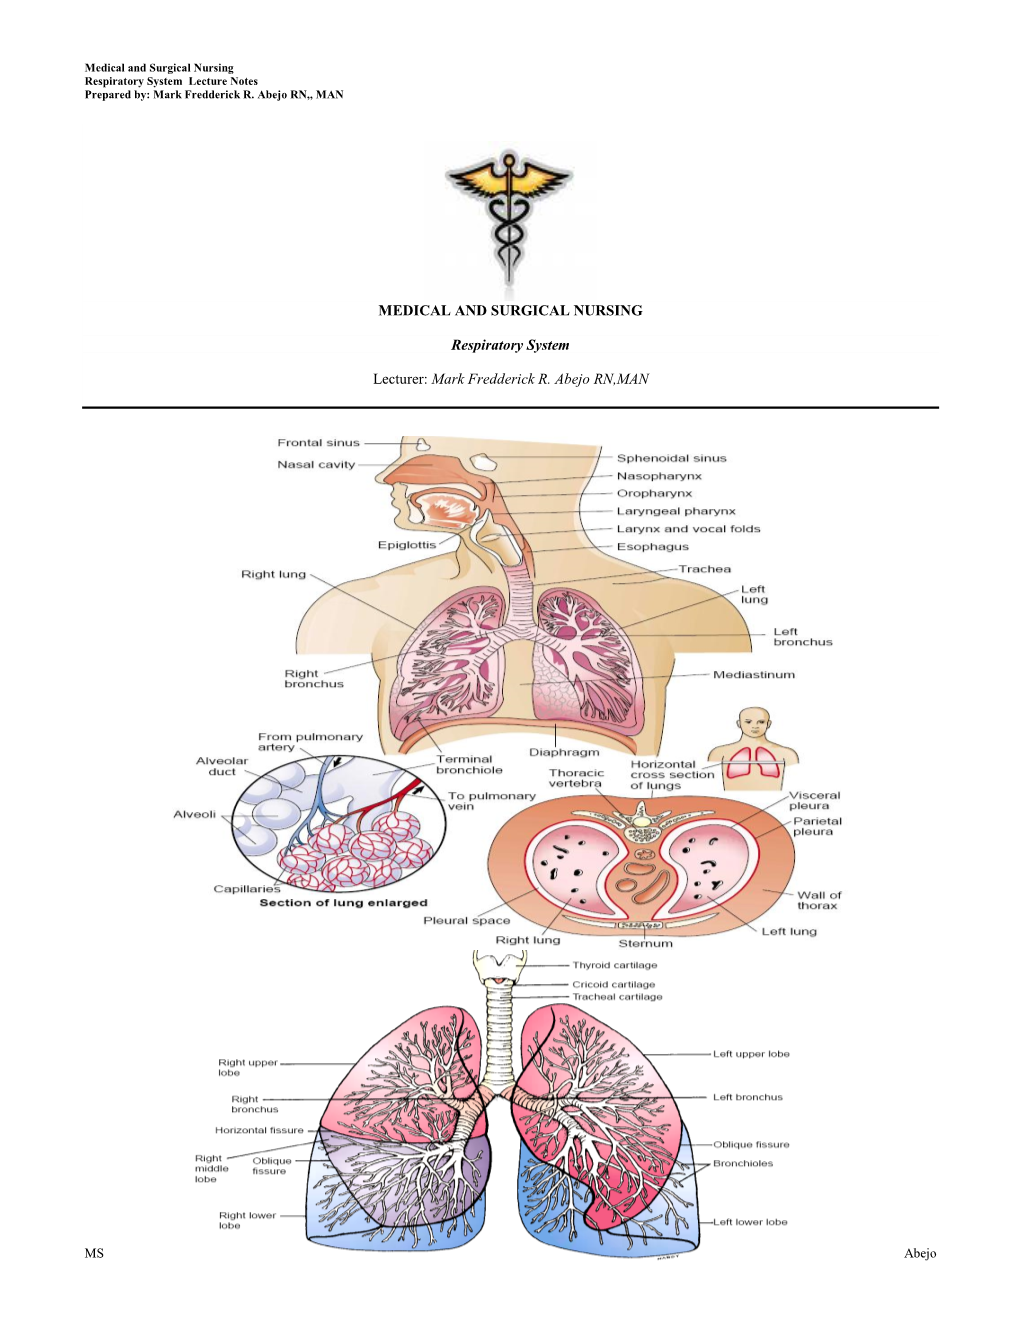 MEDICAL and SURGICAL NURSING Respiratory System Lecturer: Mark